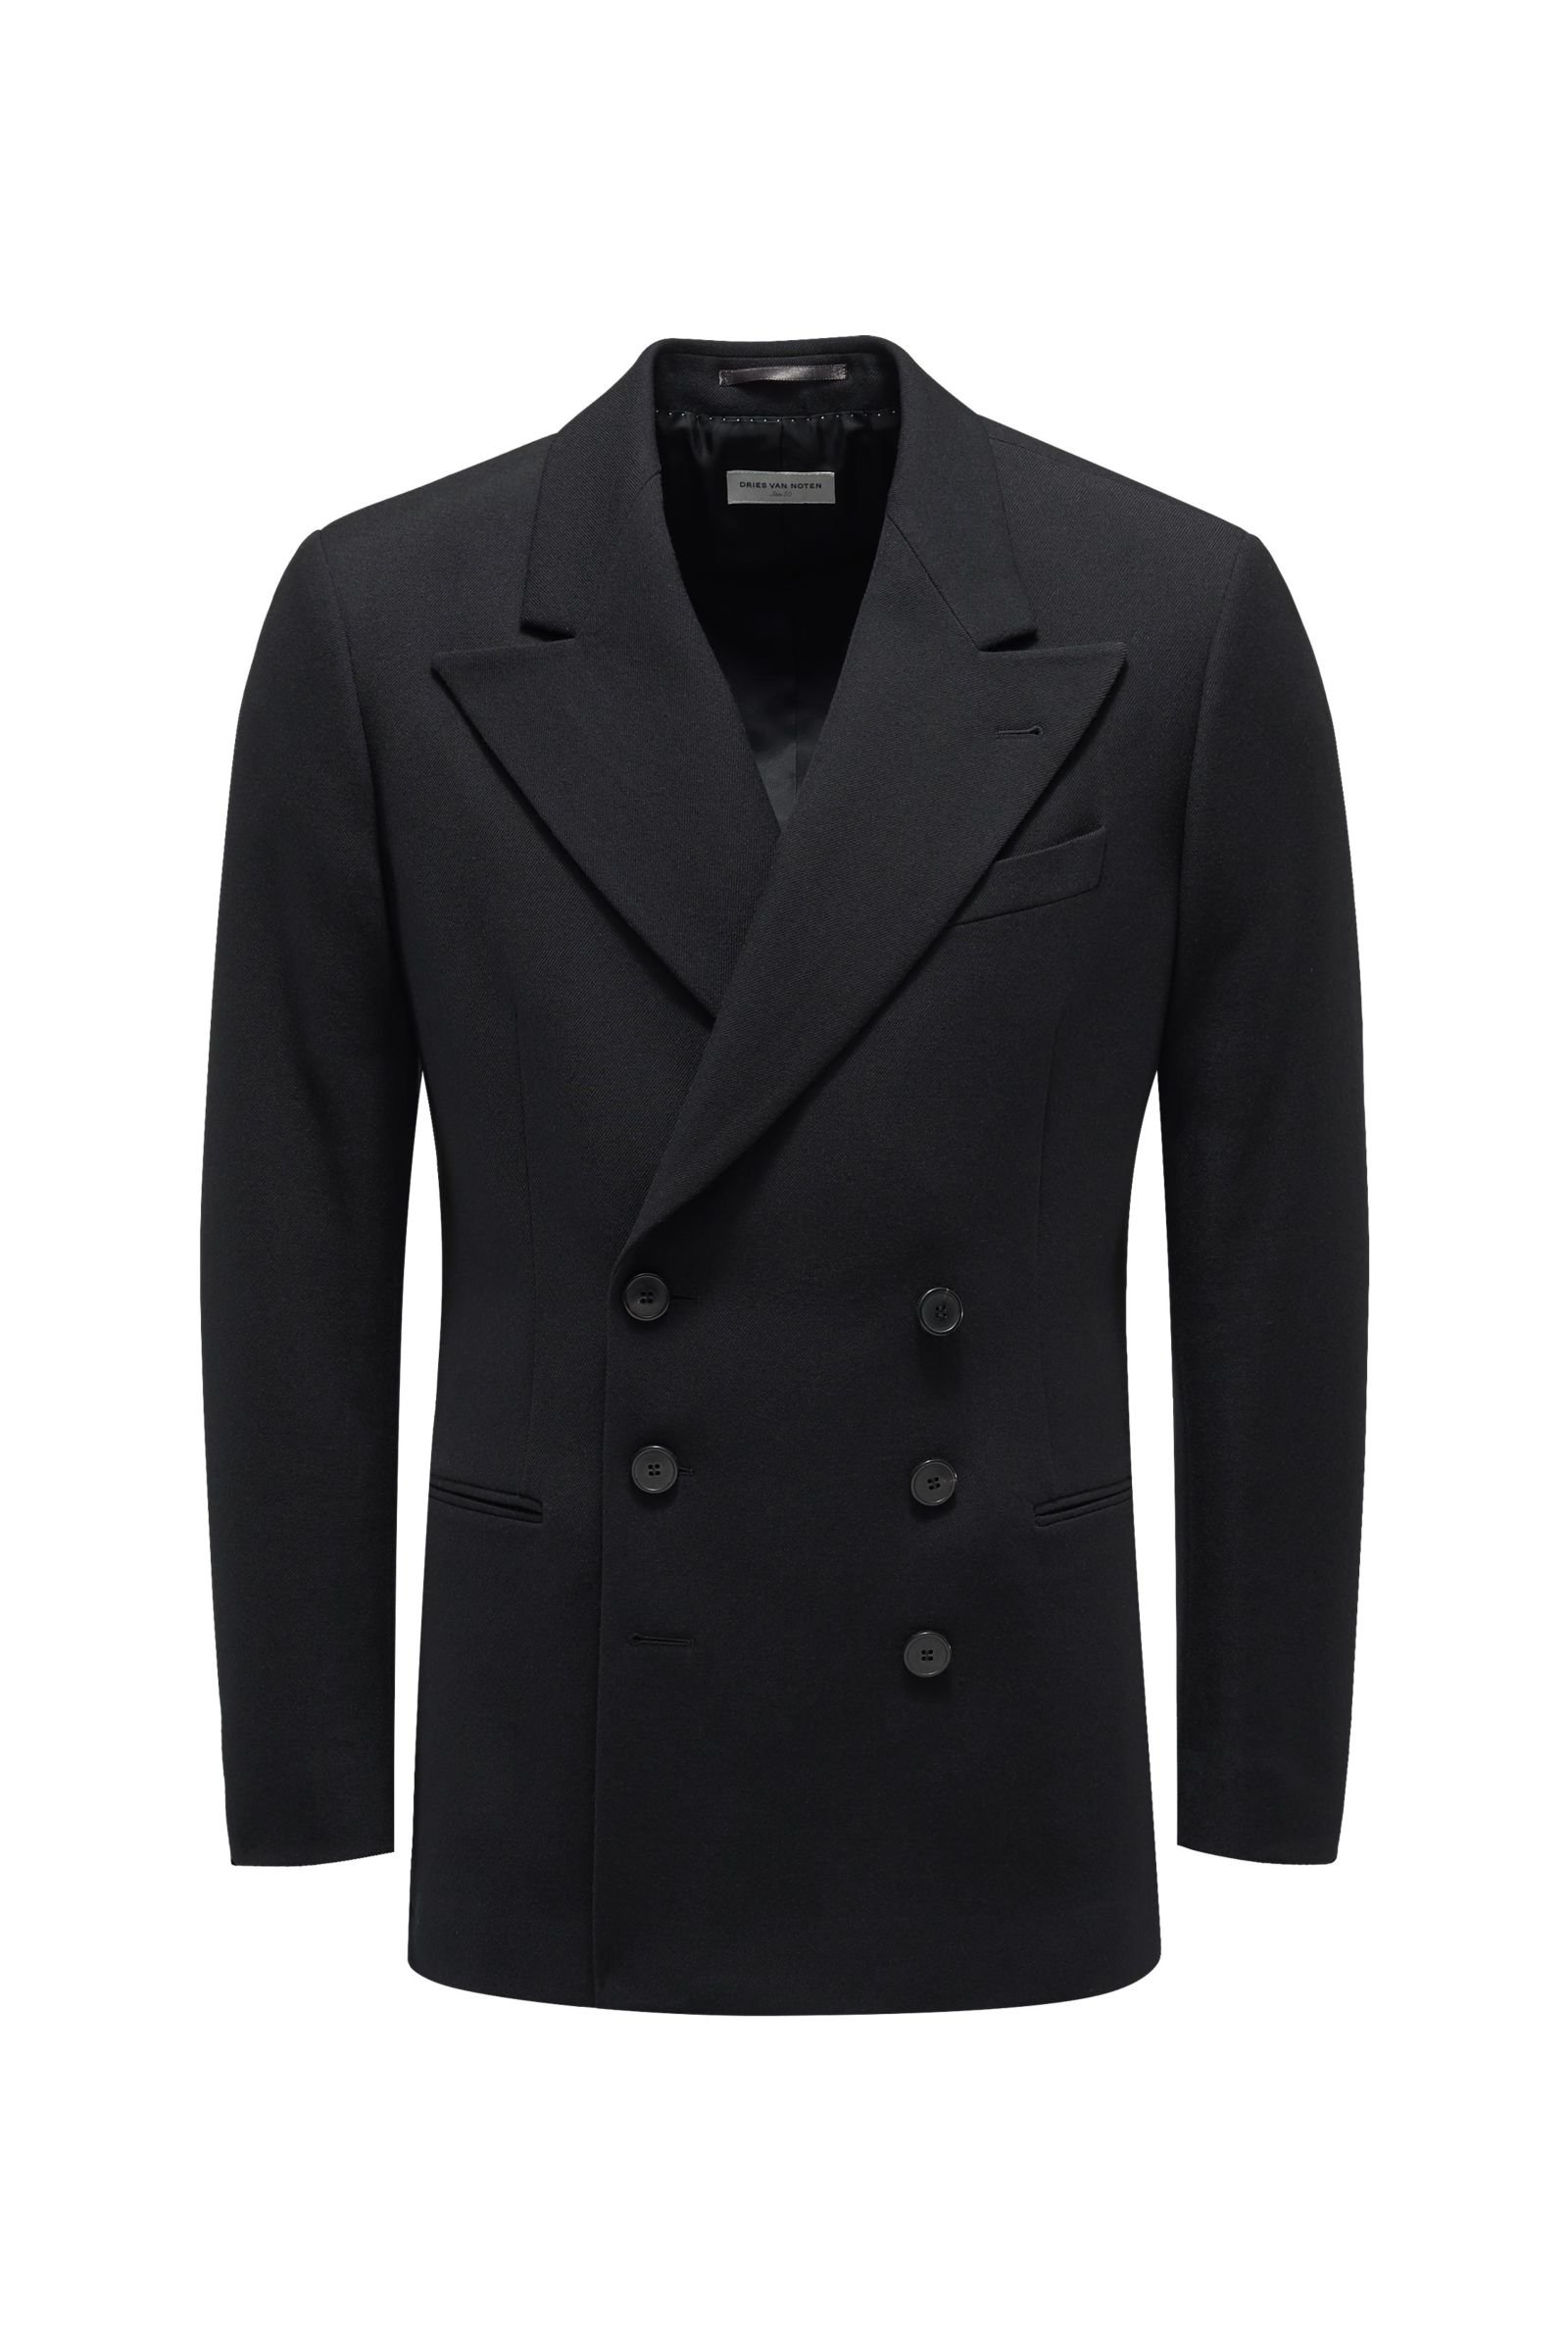 Smart-casual jacket 'Bowery' black